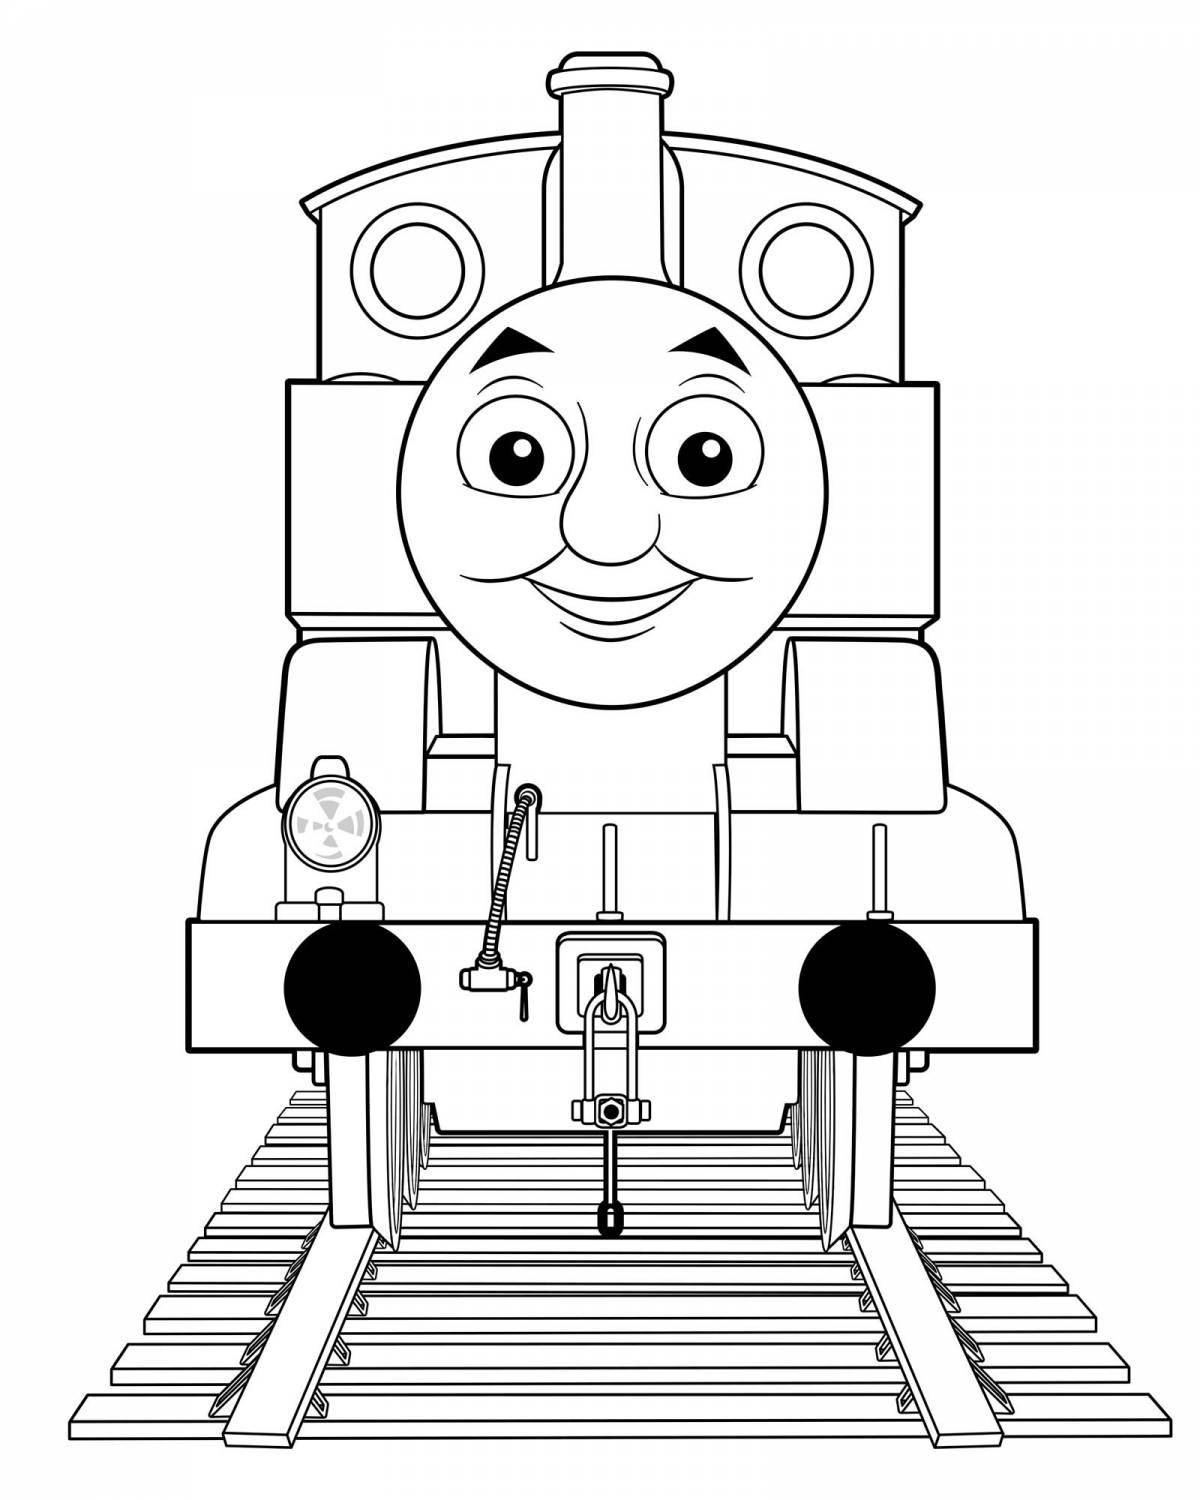 Thomas' charming train coloring page